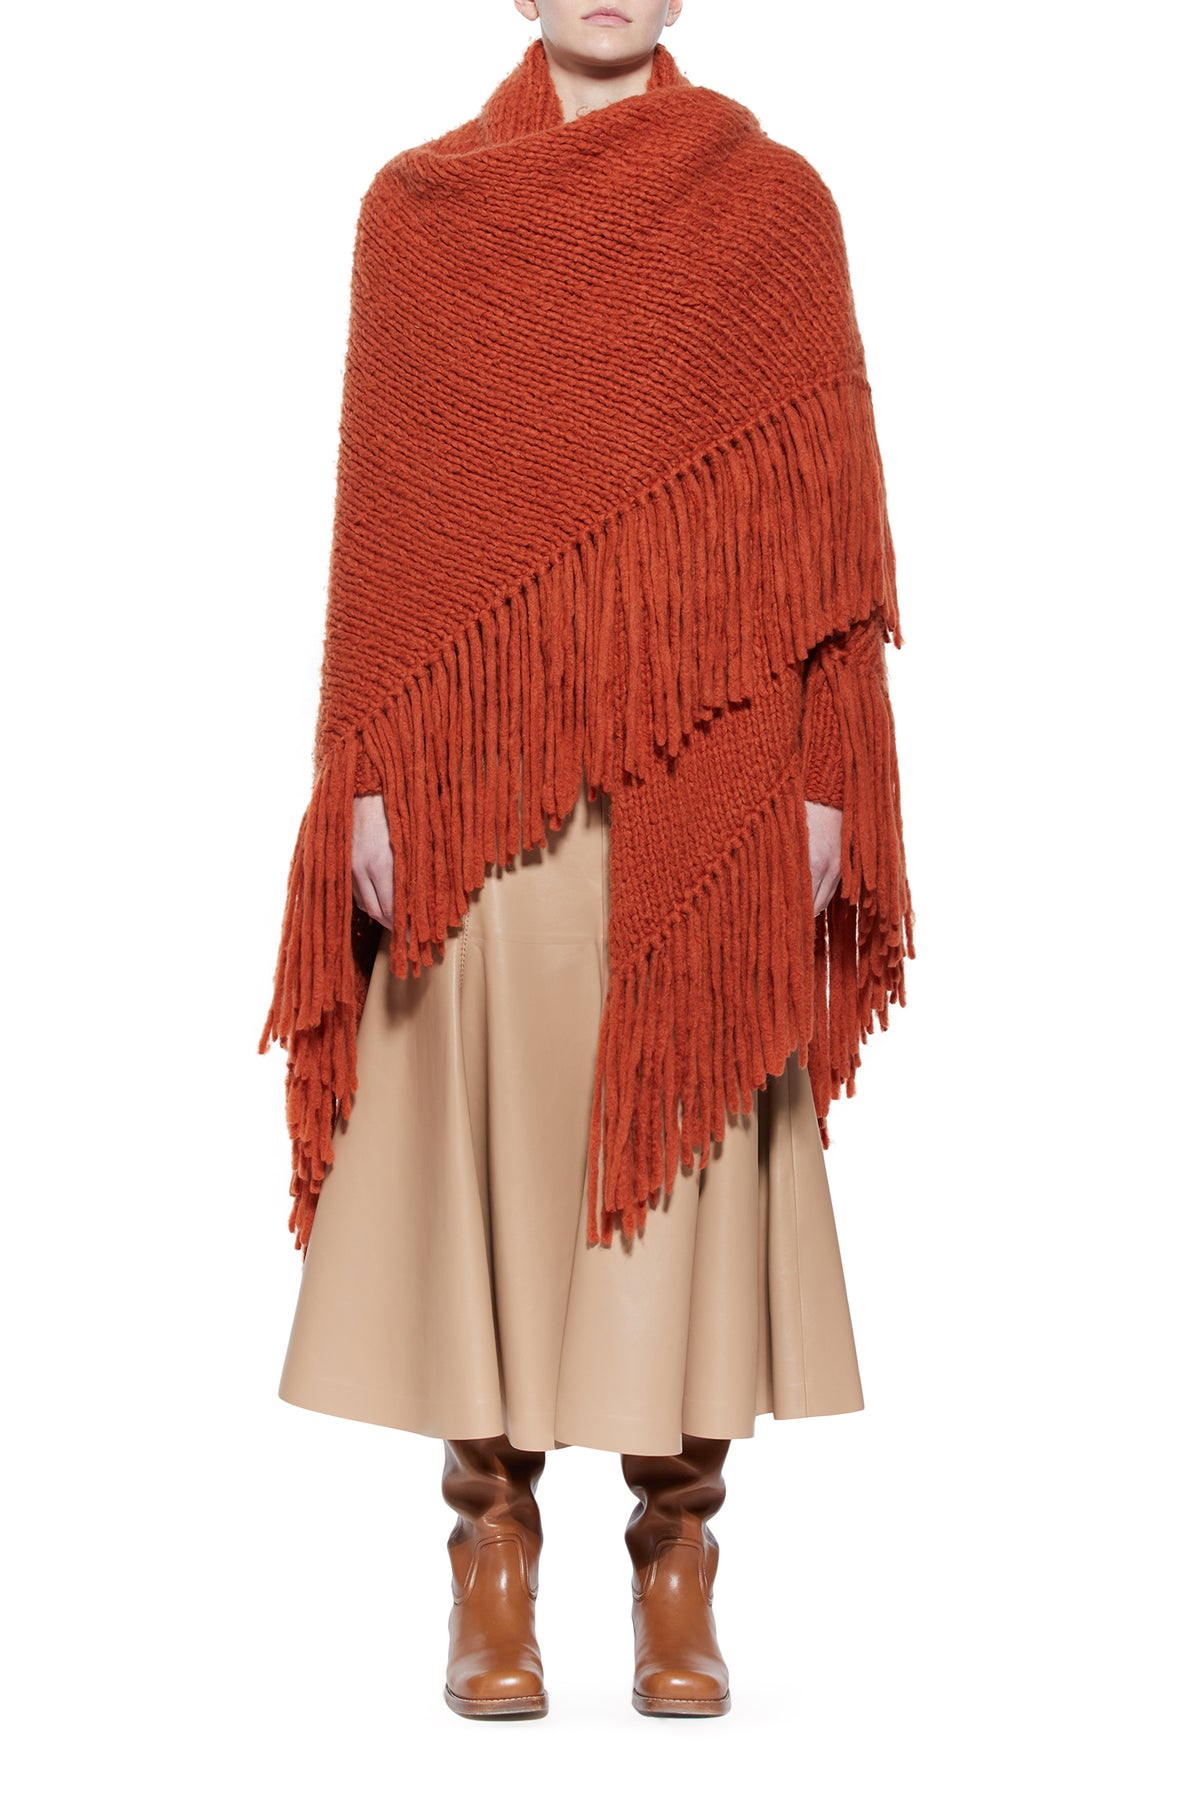 Lauren Knit Wrap in Copper Welfat Cashmere